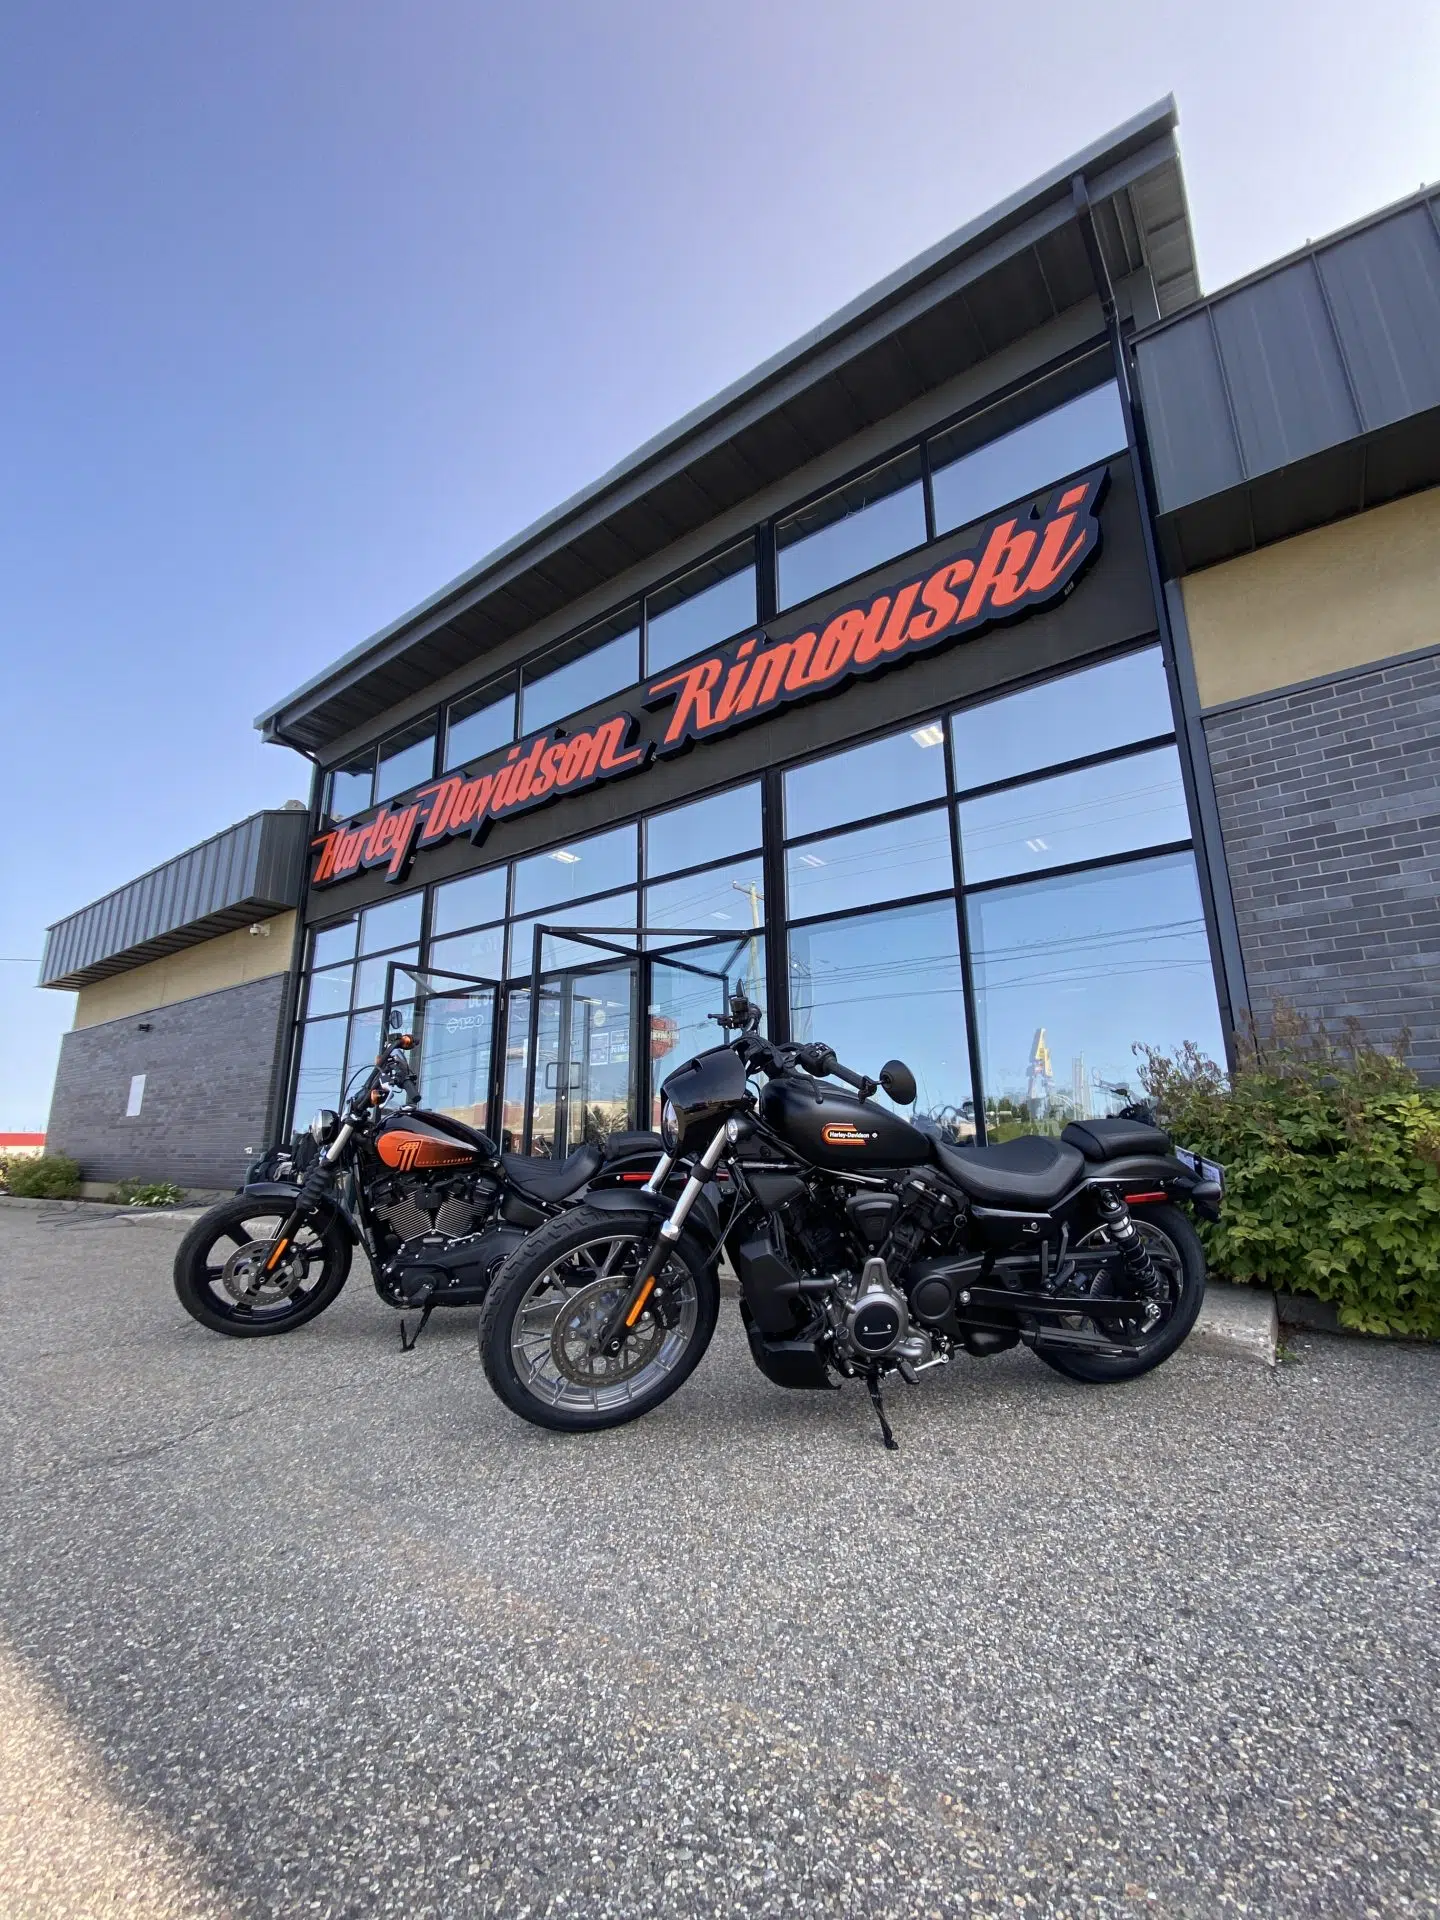 Harley-Davidson Rimouski